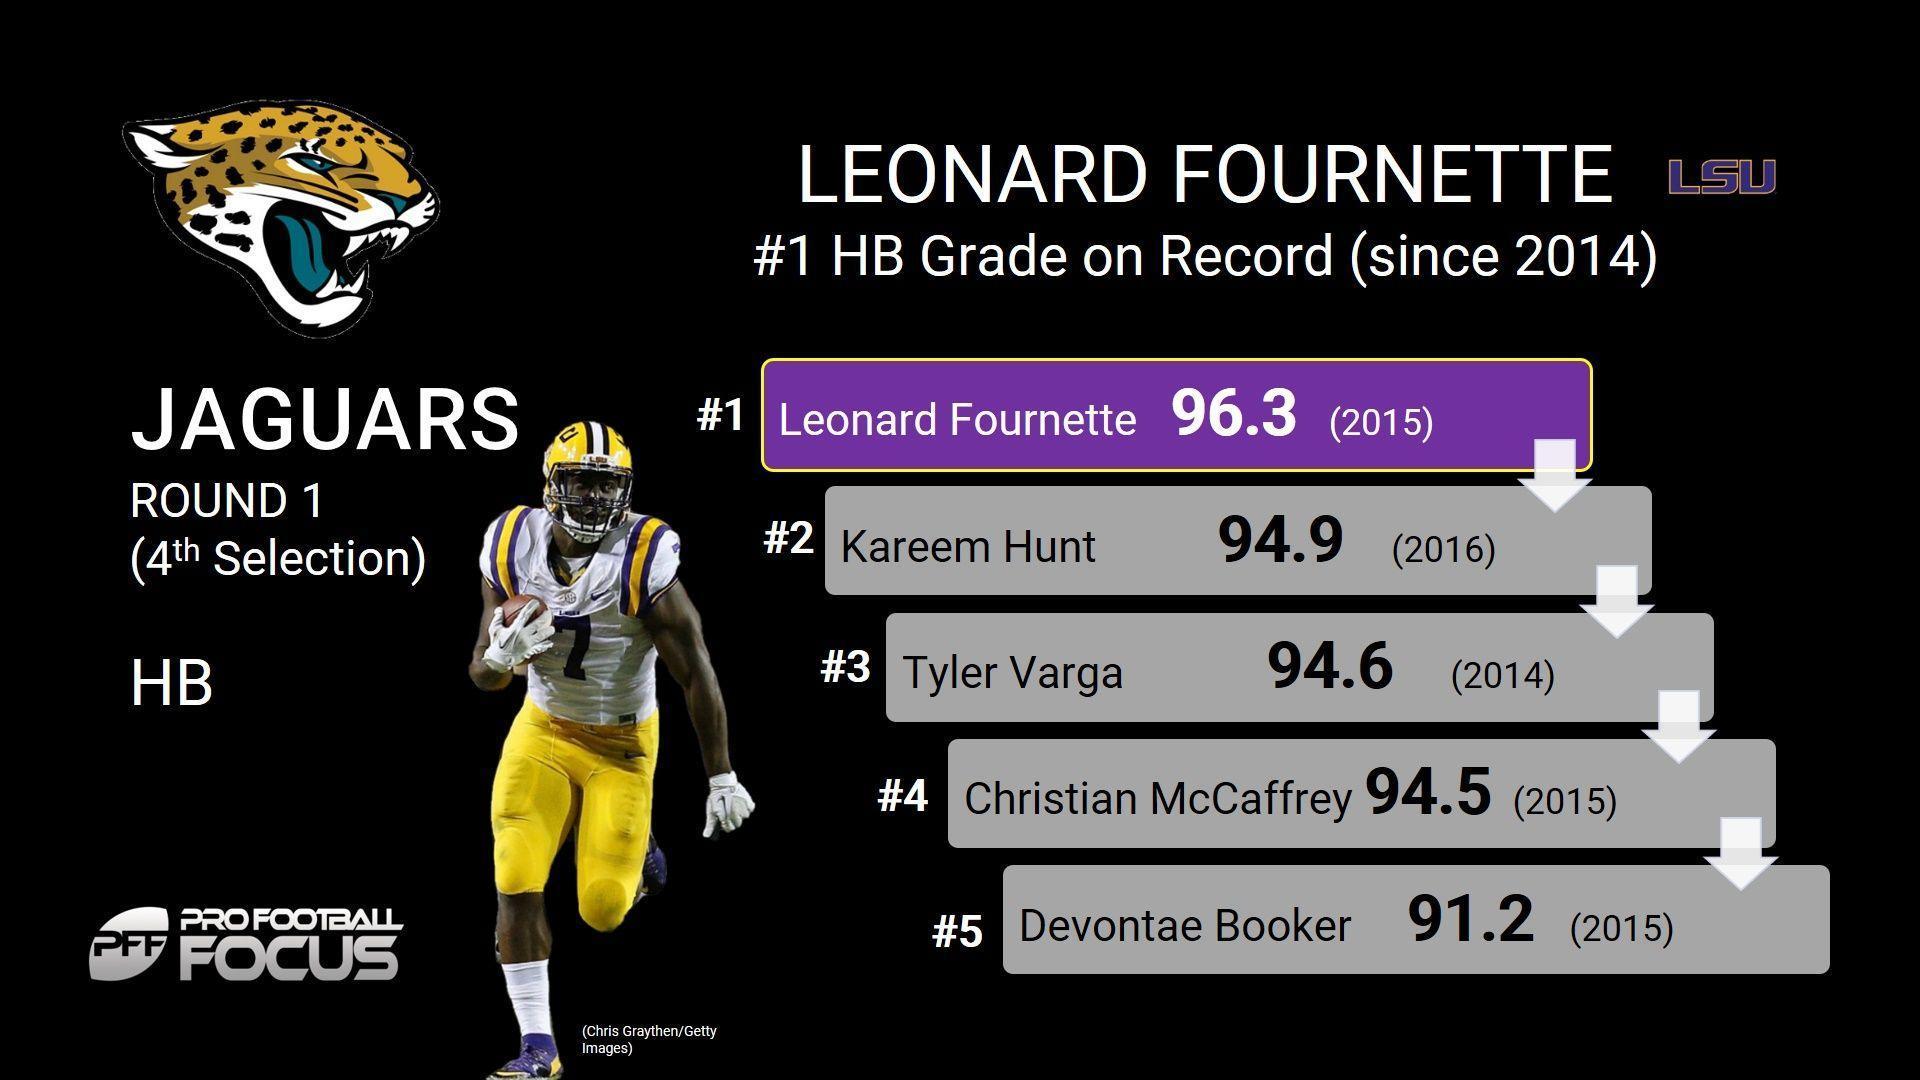 Leonard Fournette goes 4th overall in draft to Jaguars. NFL Draft